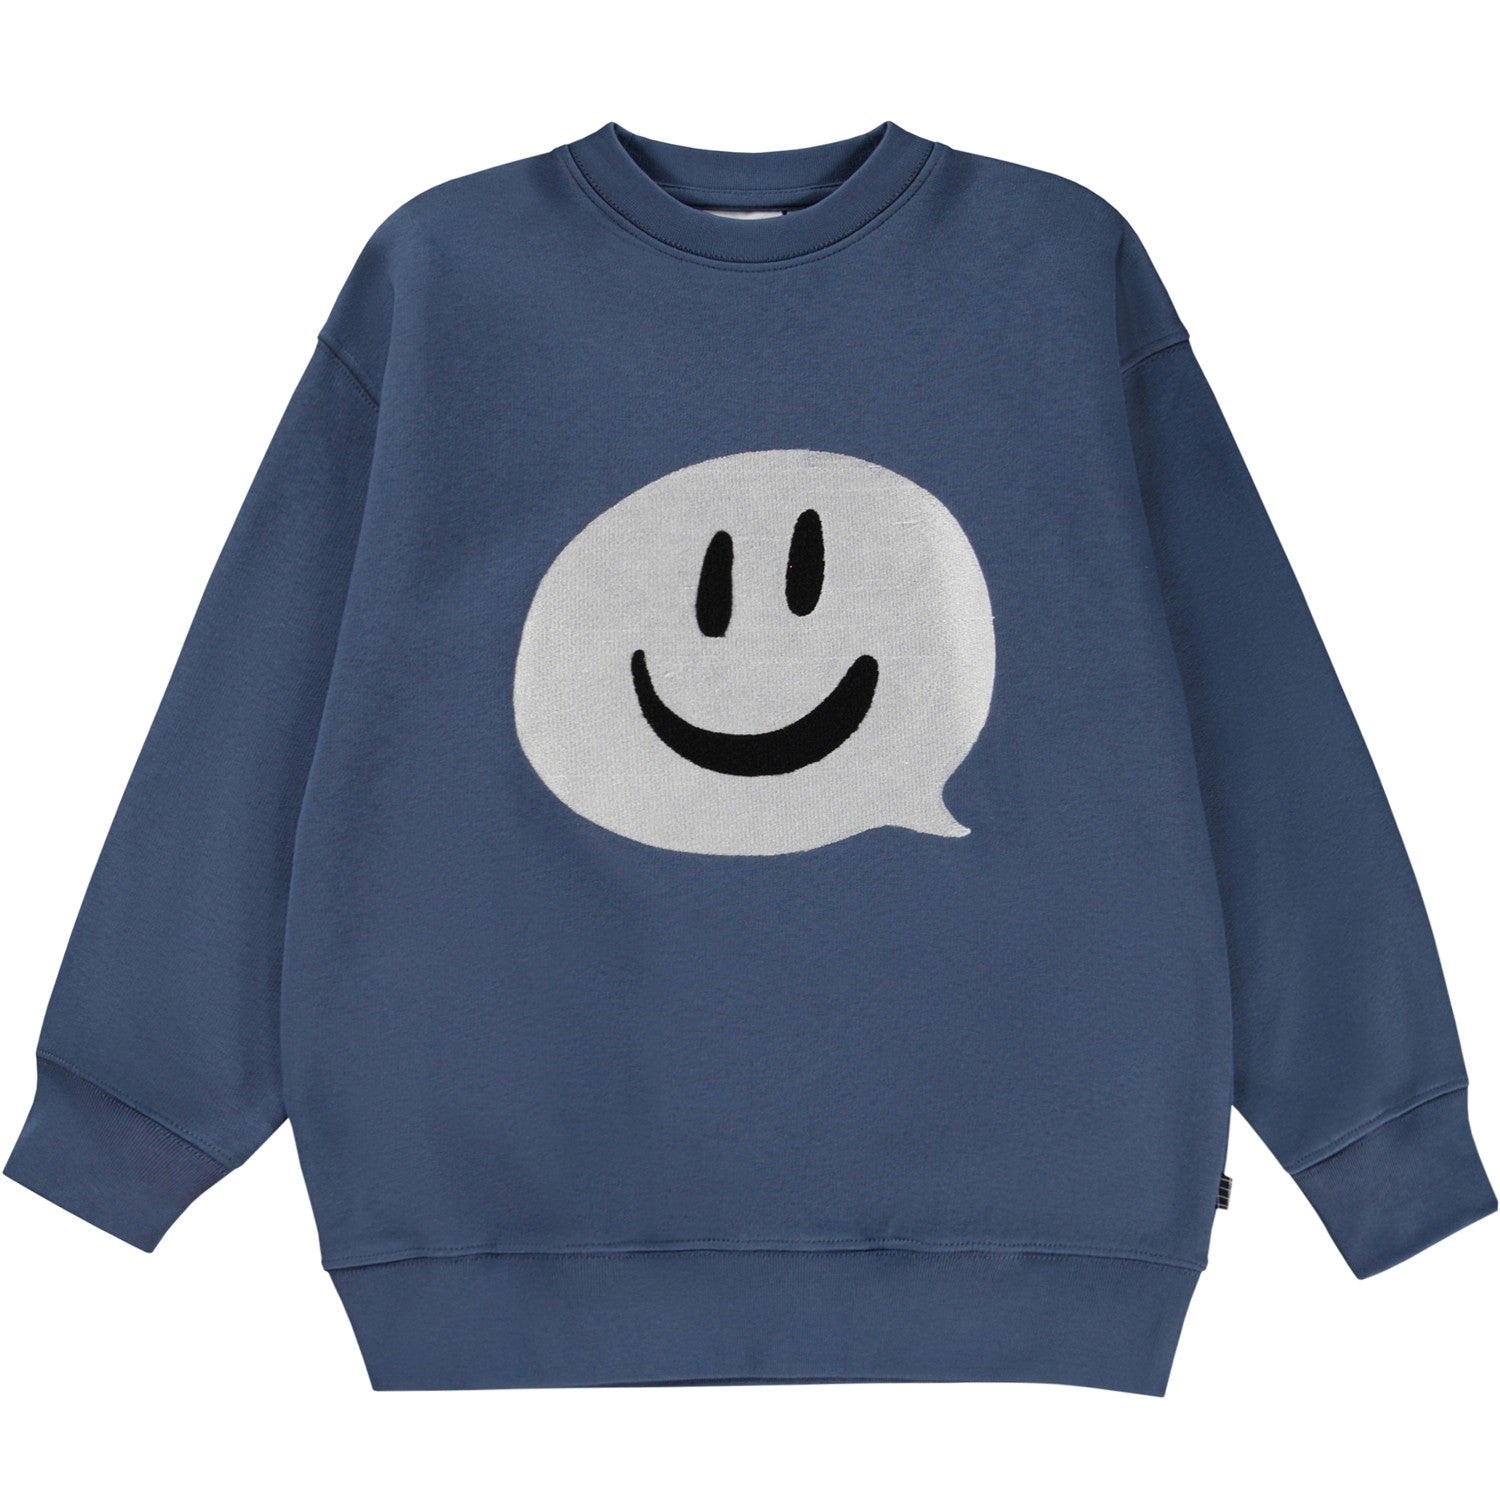 Molo Moonlight Blue Mar Sweatshirt